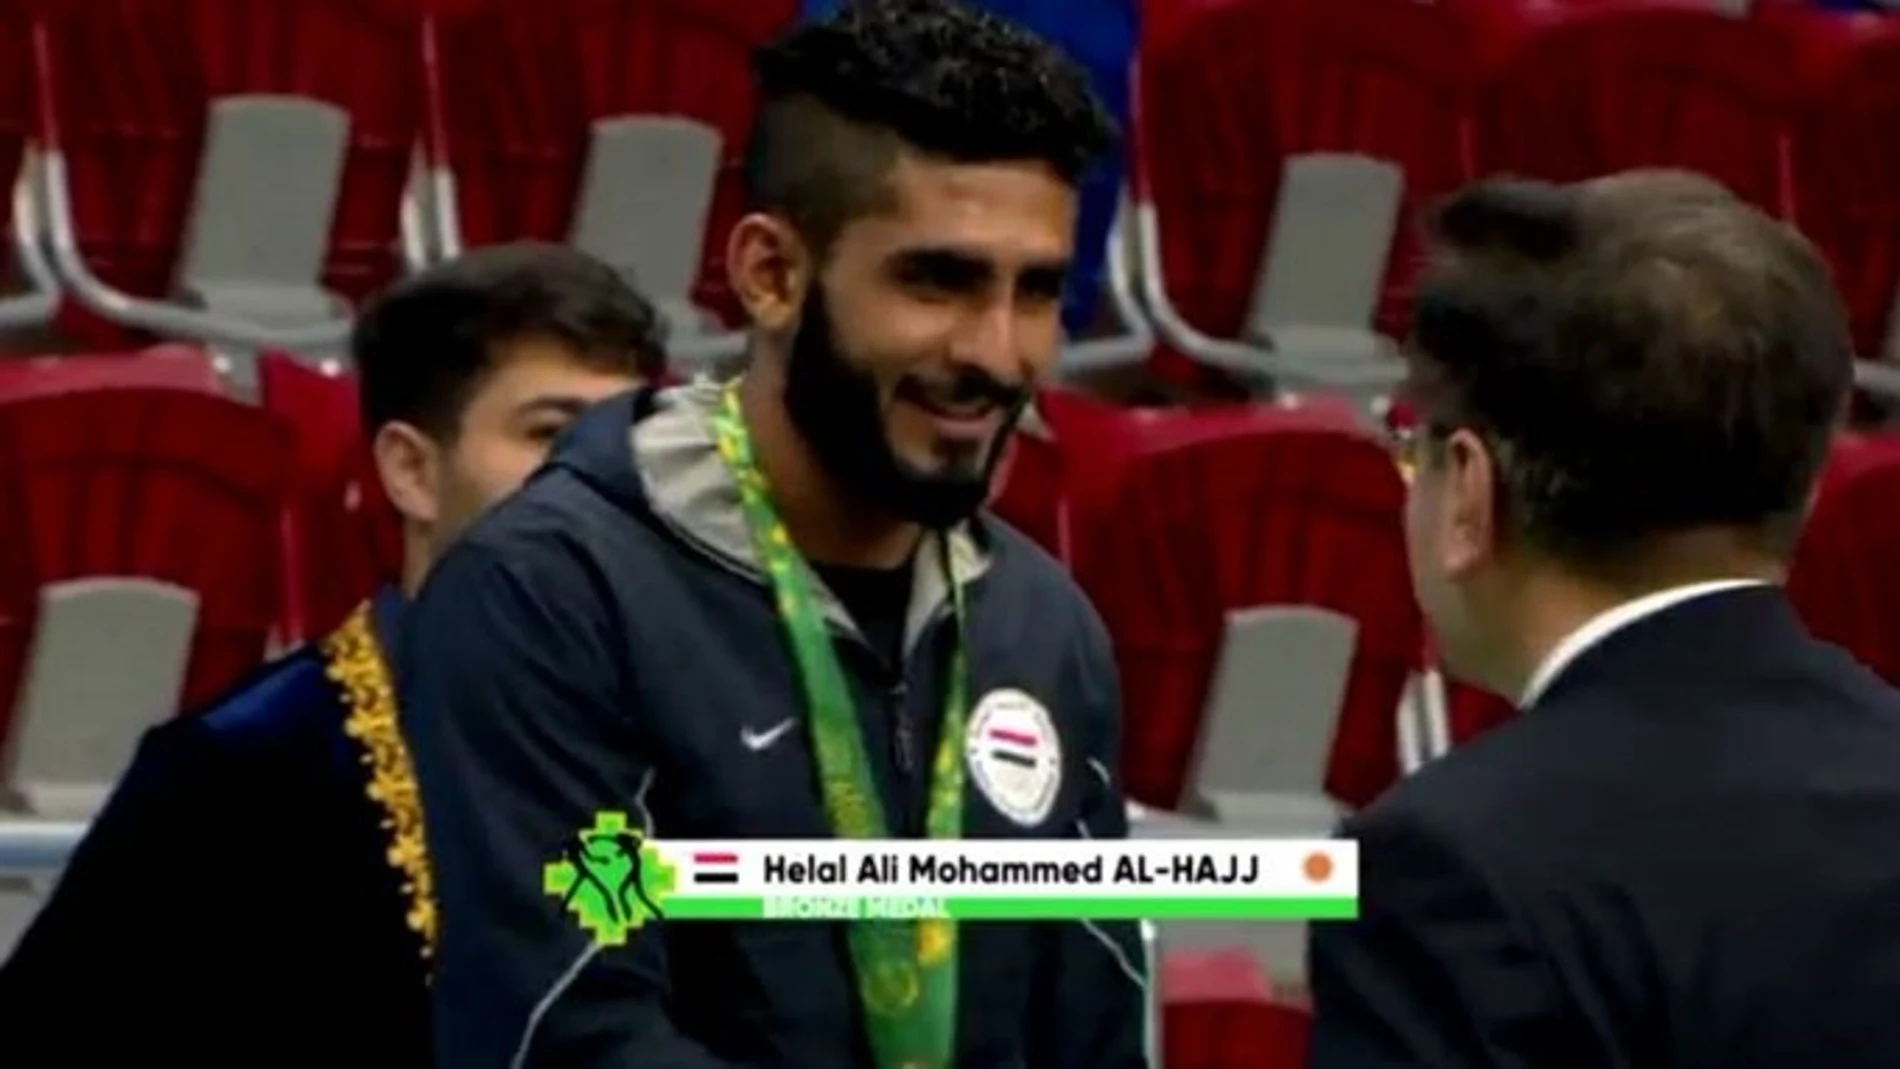 El medallista yemení Helal Ali Mohammed Al-Hajj